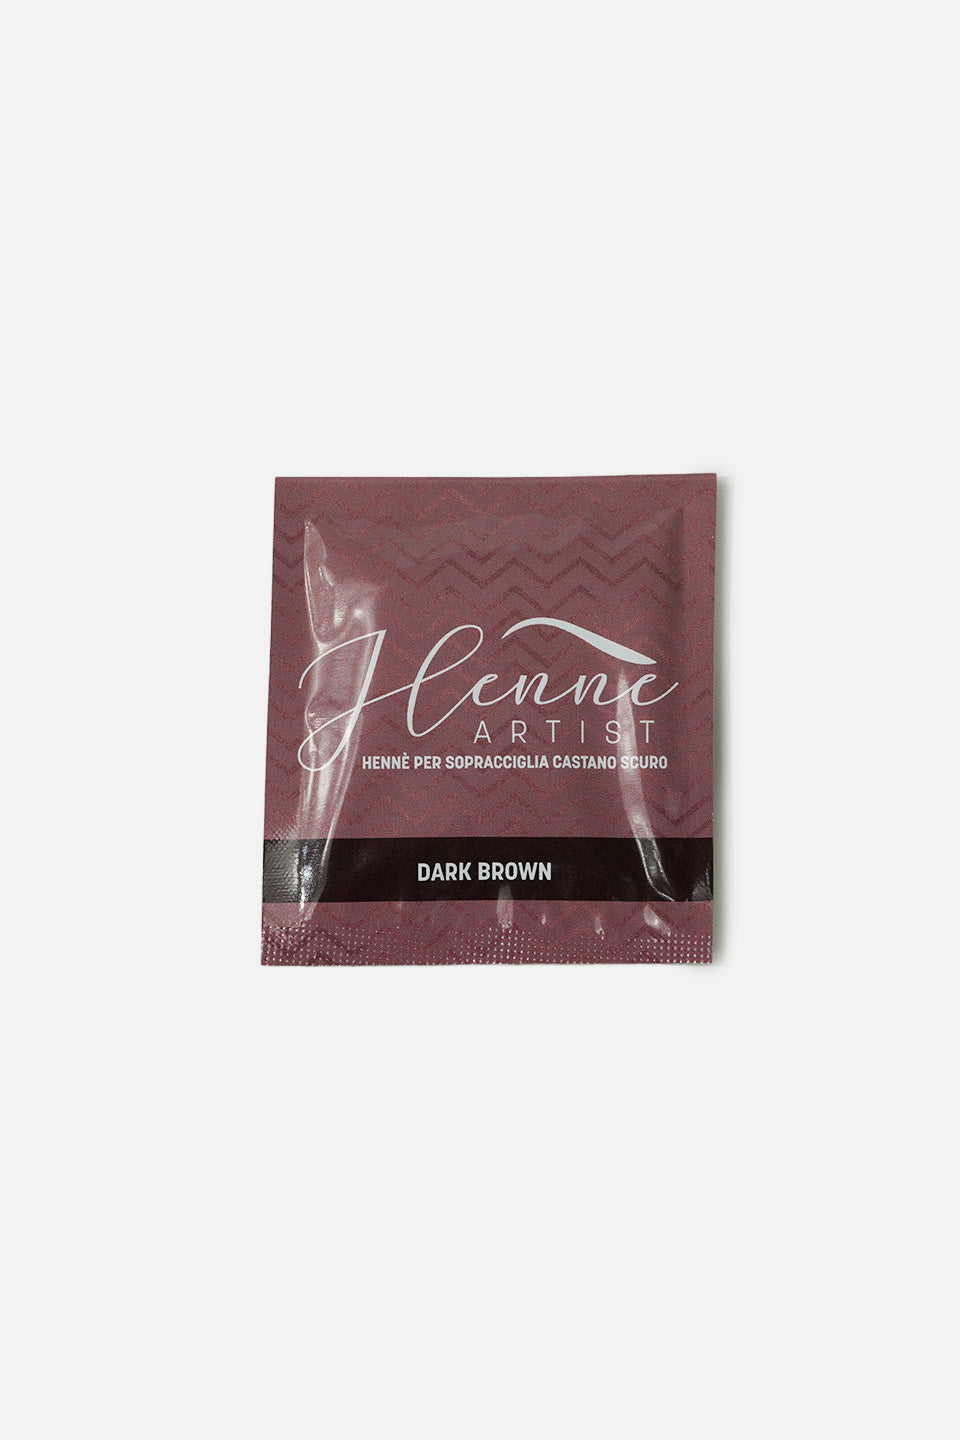 Kit completo per hennè sopracciglia - HENNÈ ARTIST